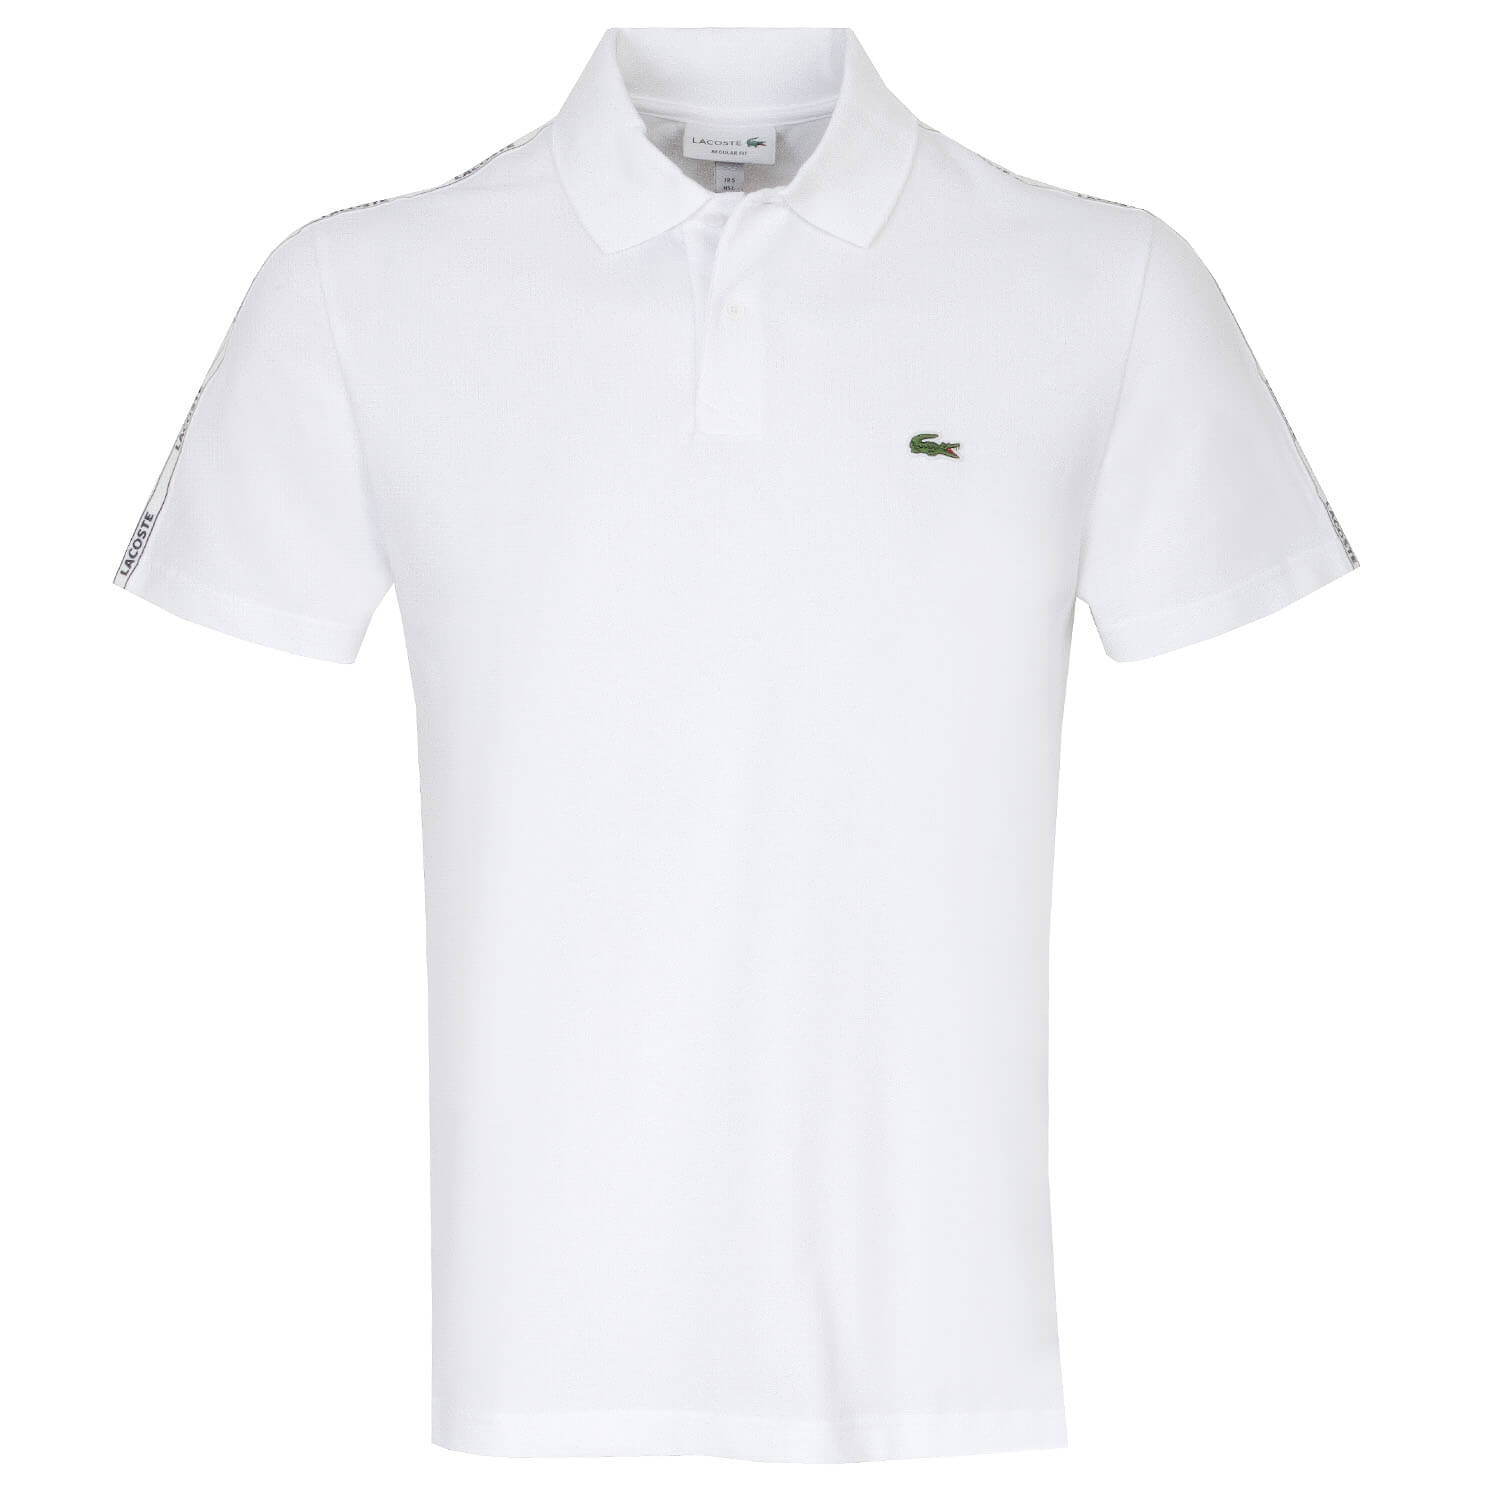 Lacoste Contrast Branded Shoulder Golf Polo Shirt